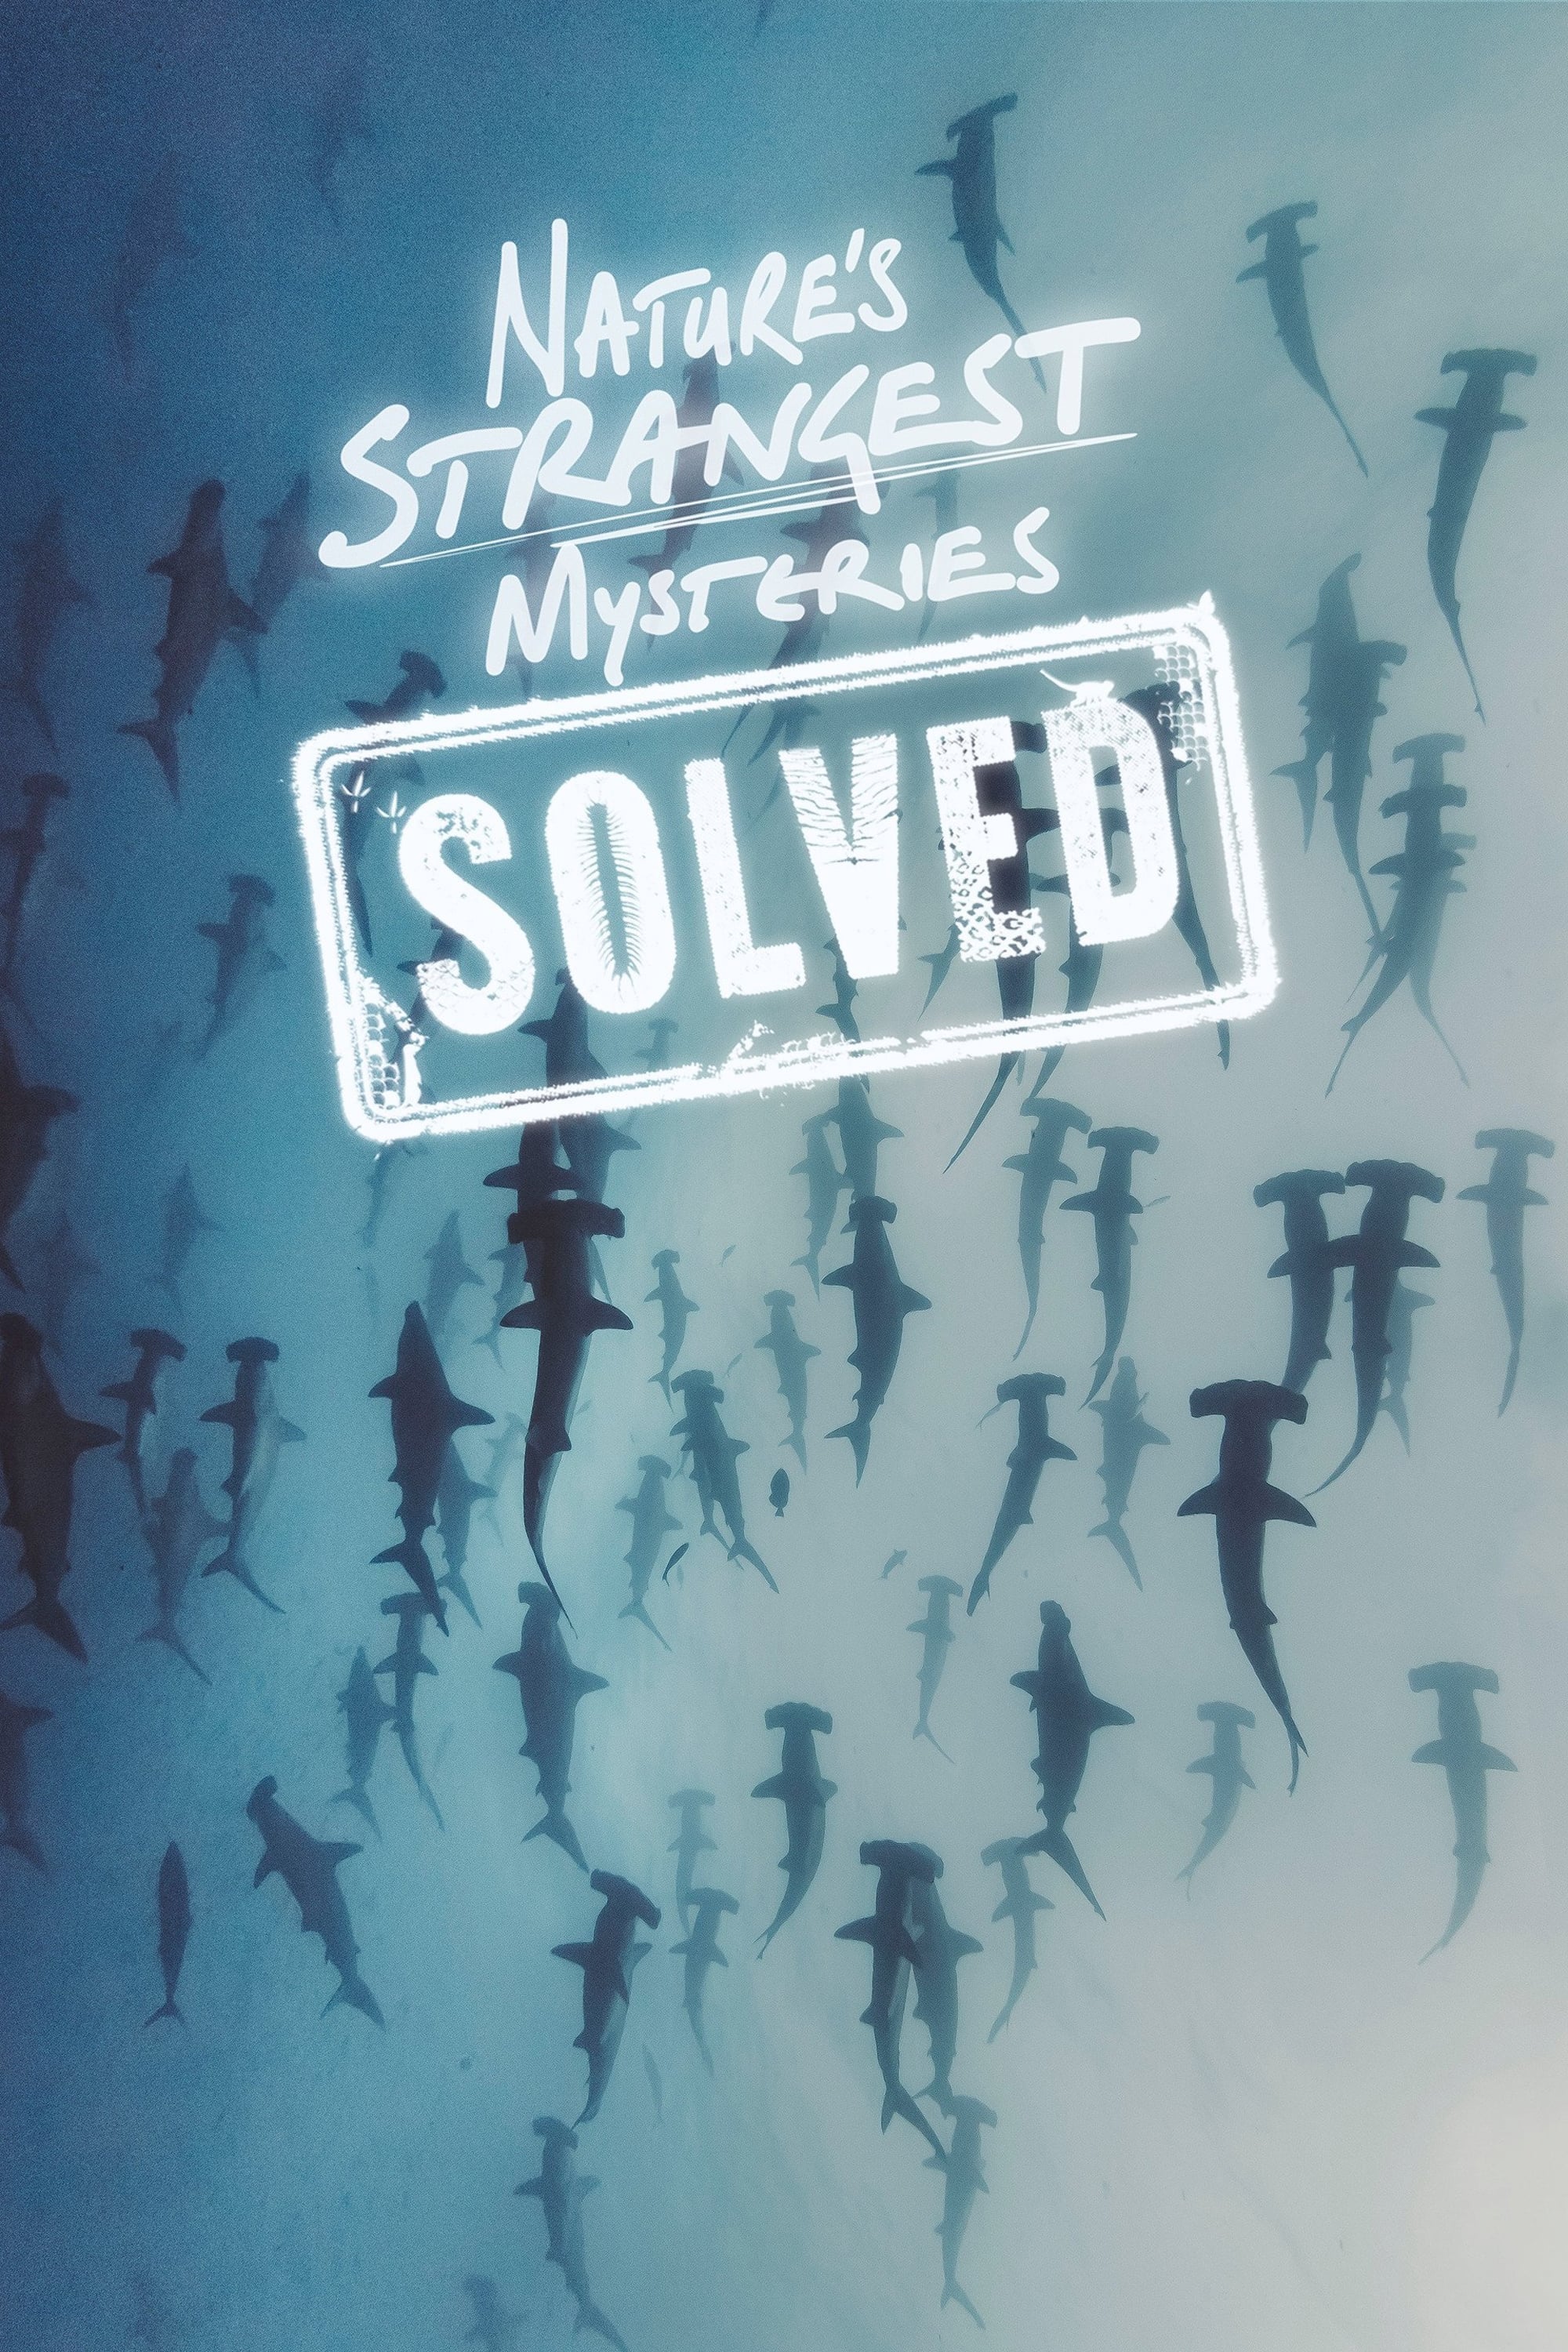 Nature's Strangest Mysteries: Solved (2019)